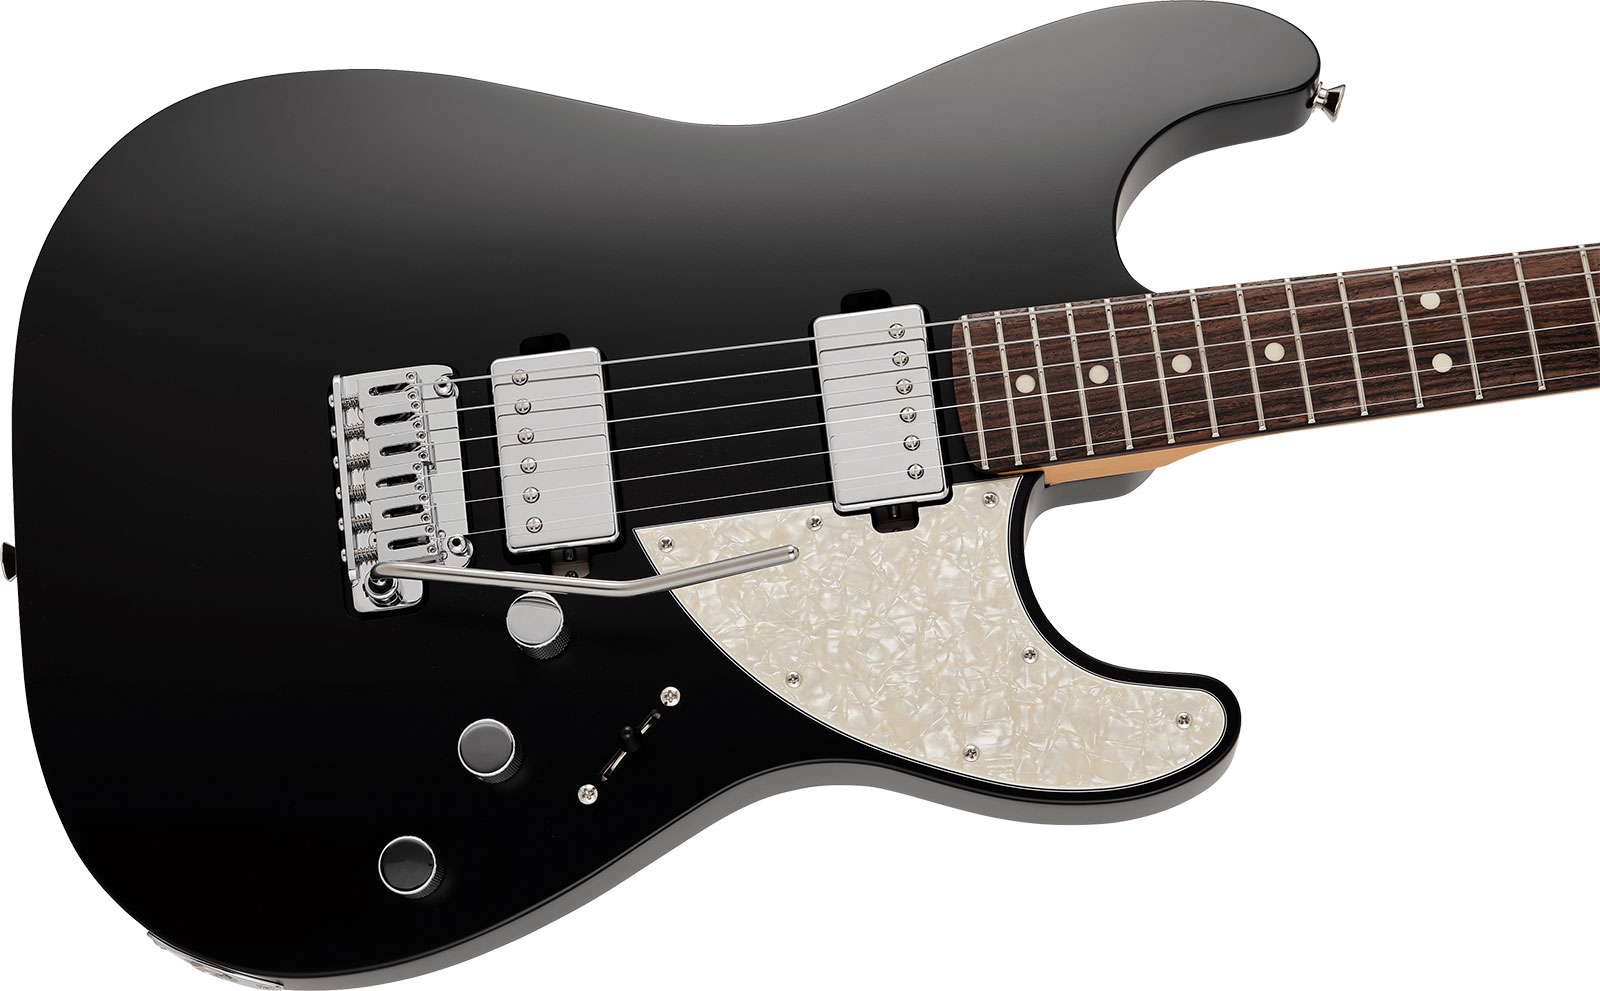 Fender Strat Elemental Mij Jap 2h Trem Rw - Stone Black - Guitare Électrique Forme Str - Variation 2